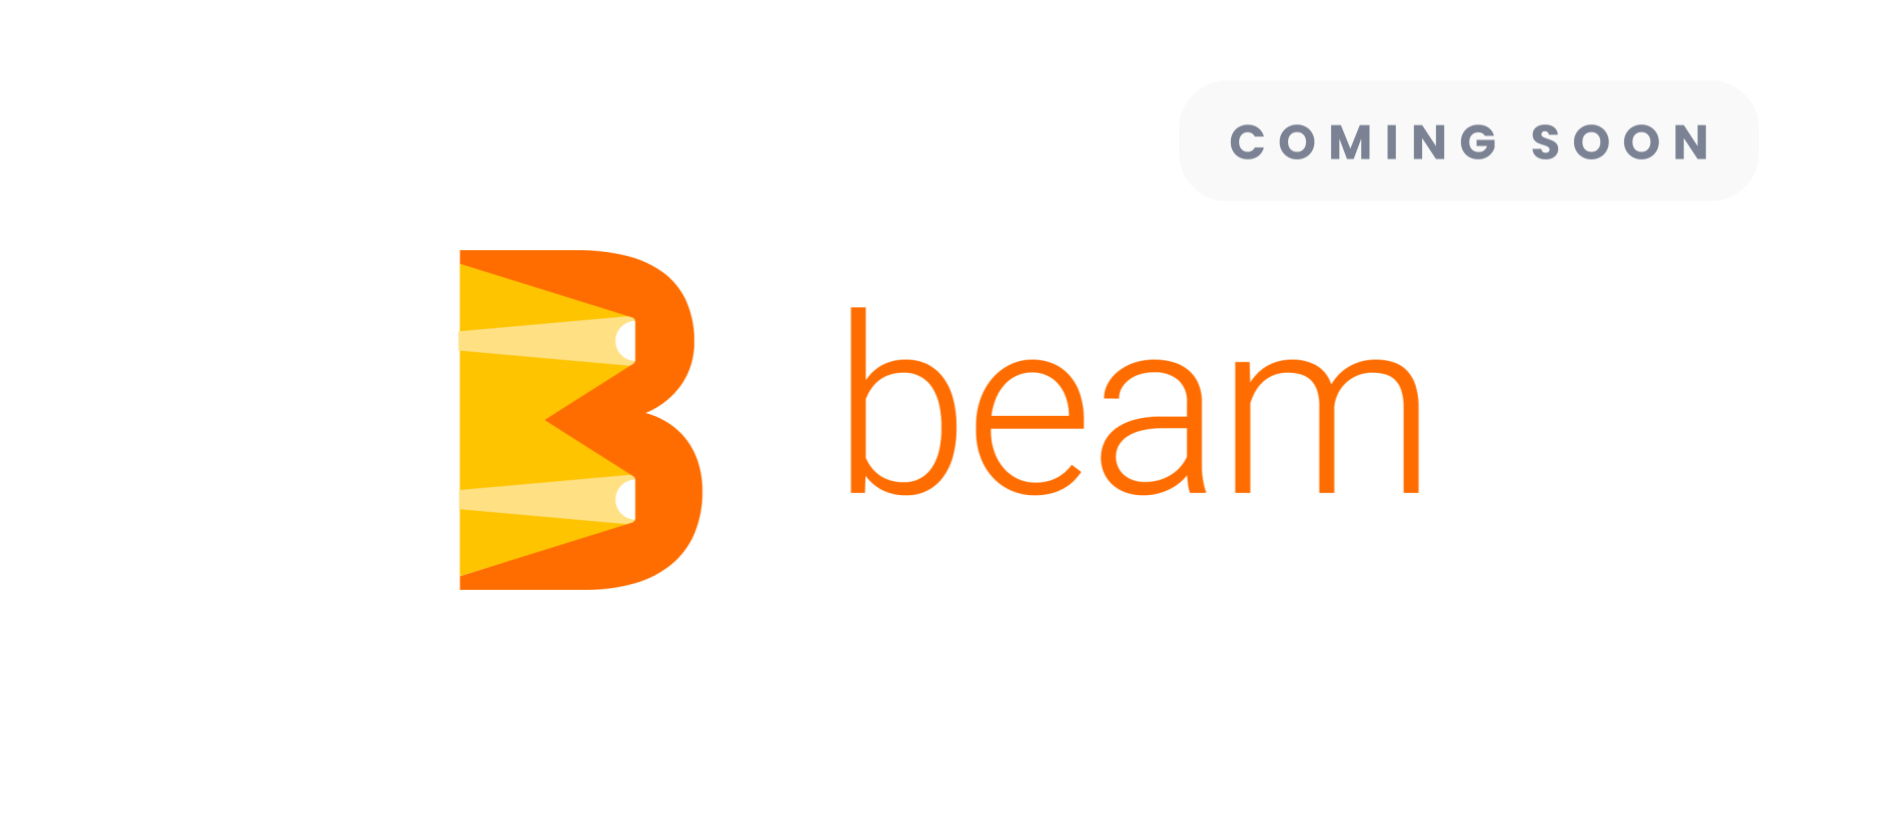 Transformation - beam - Coming soon